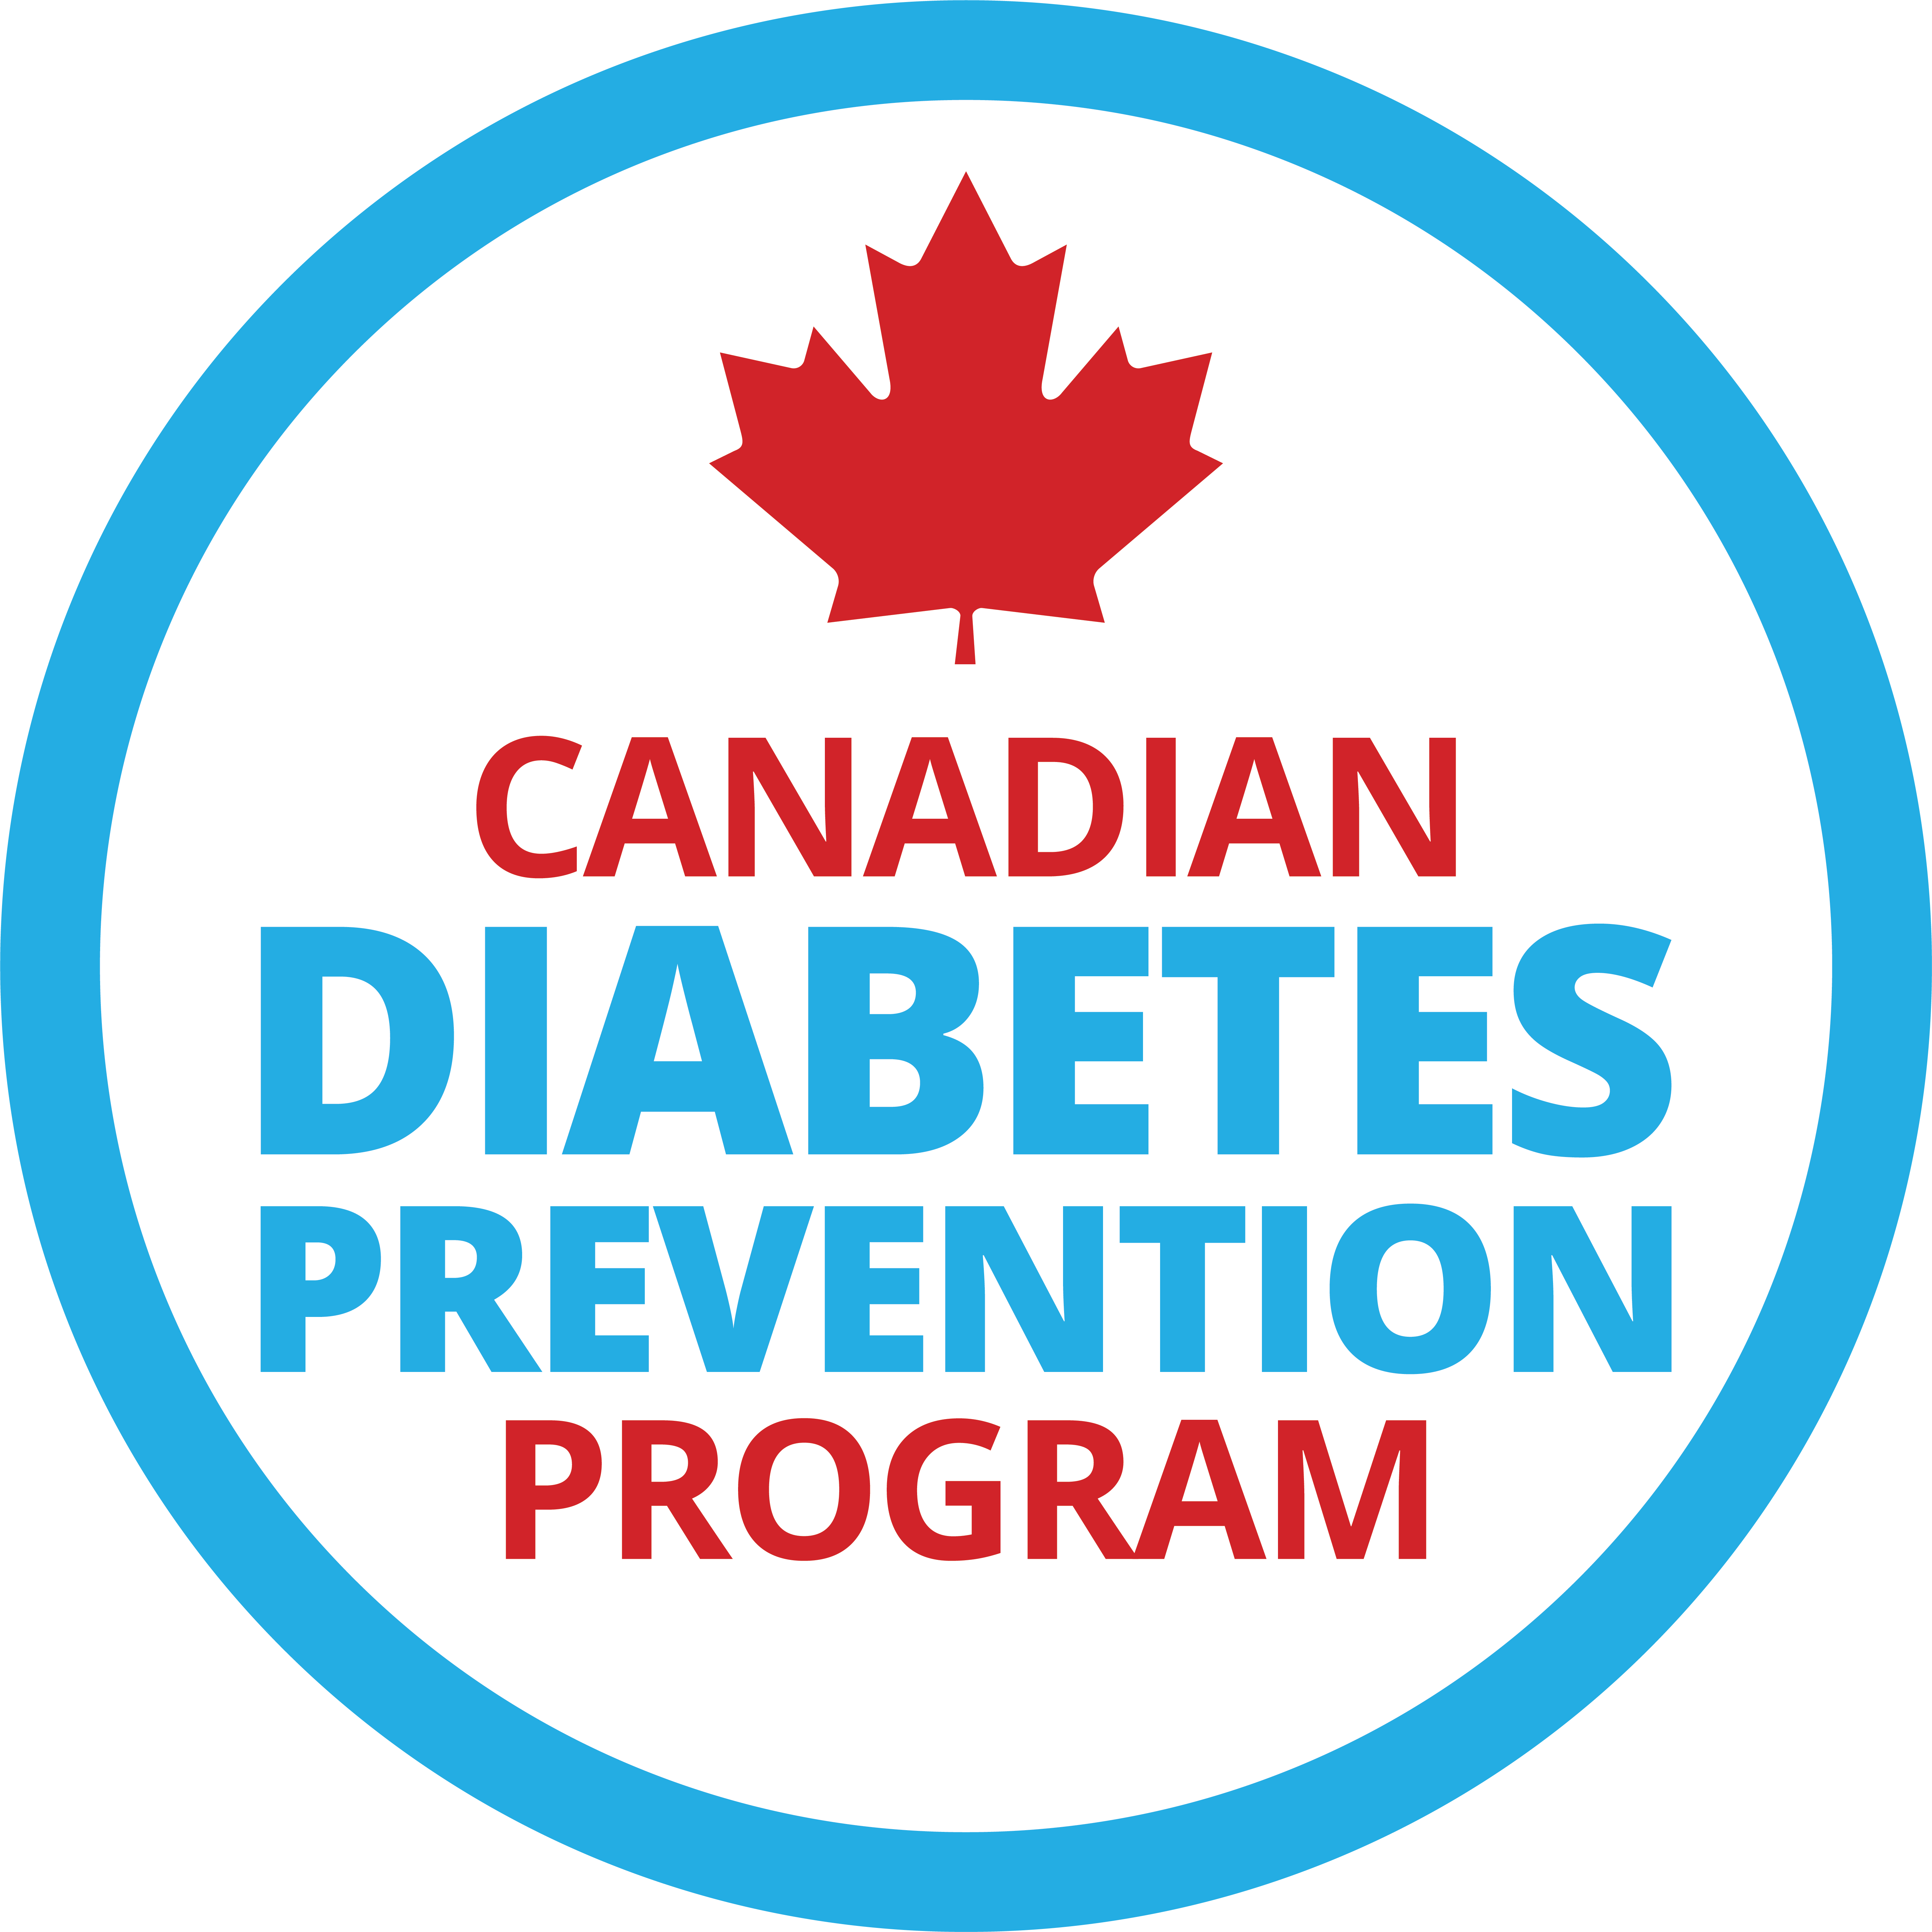 Canadian Diabetes Prevention Program Help prevent Type 2 diabetesNow